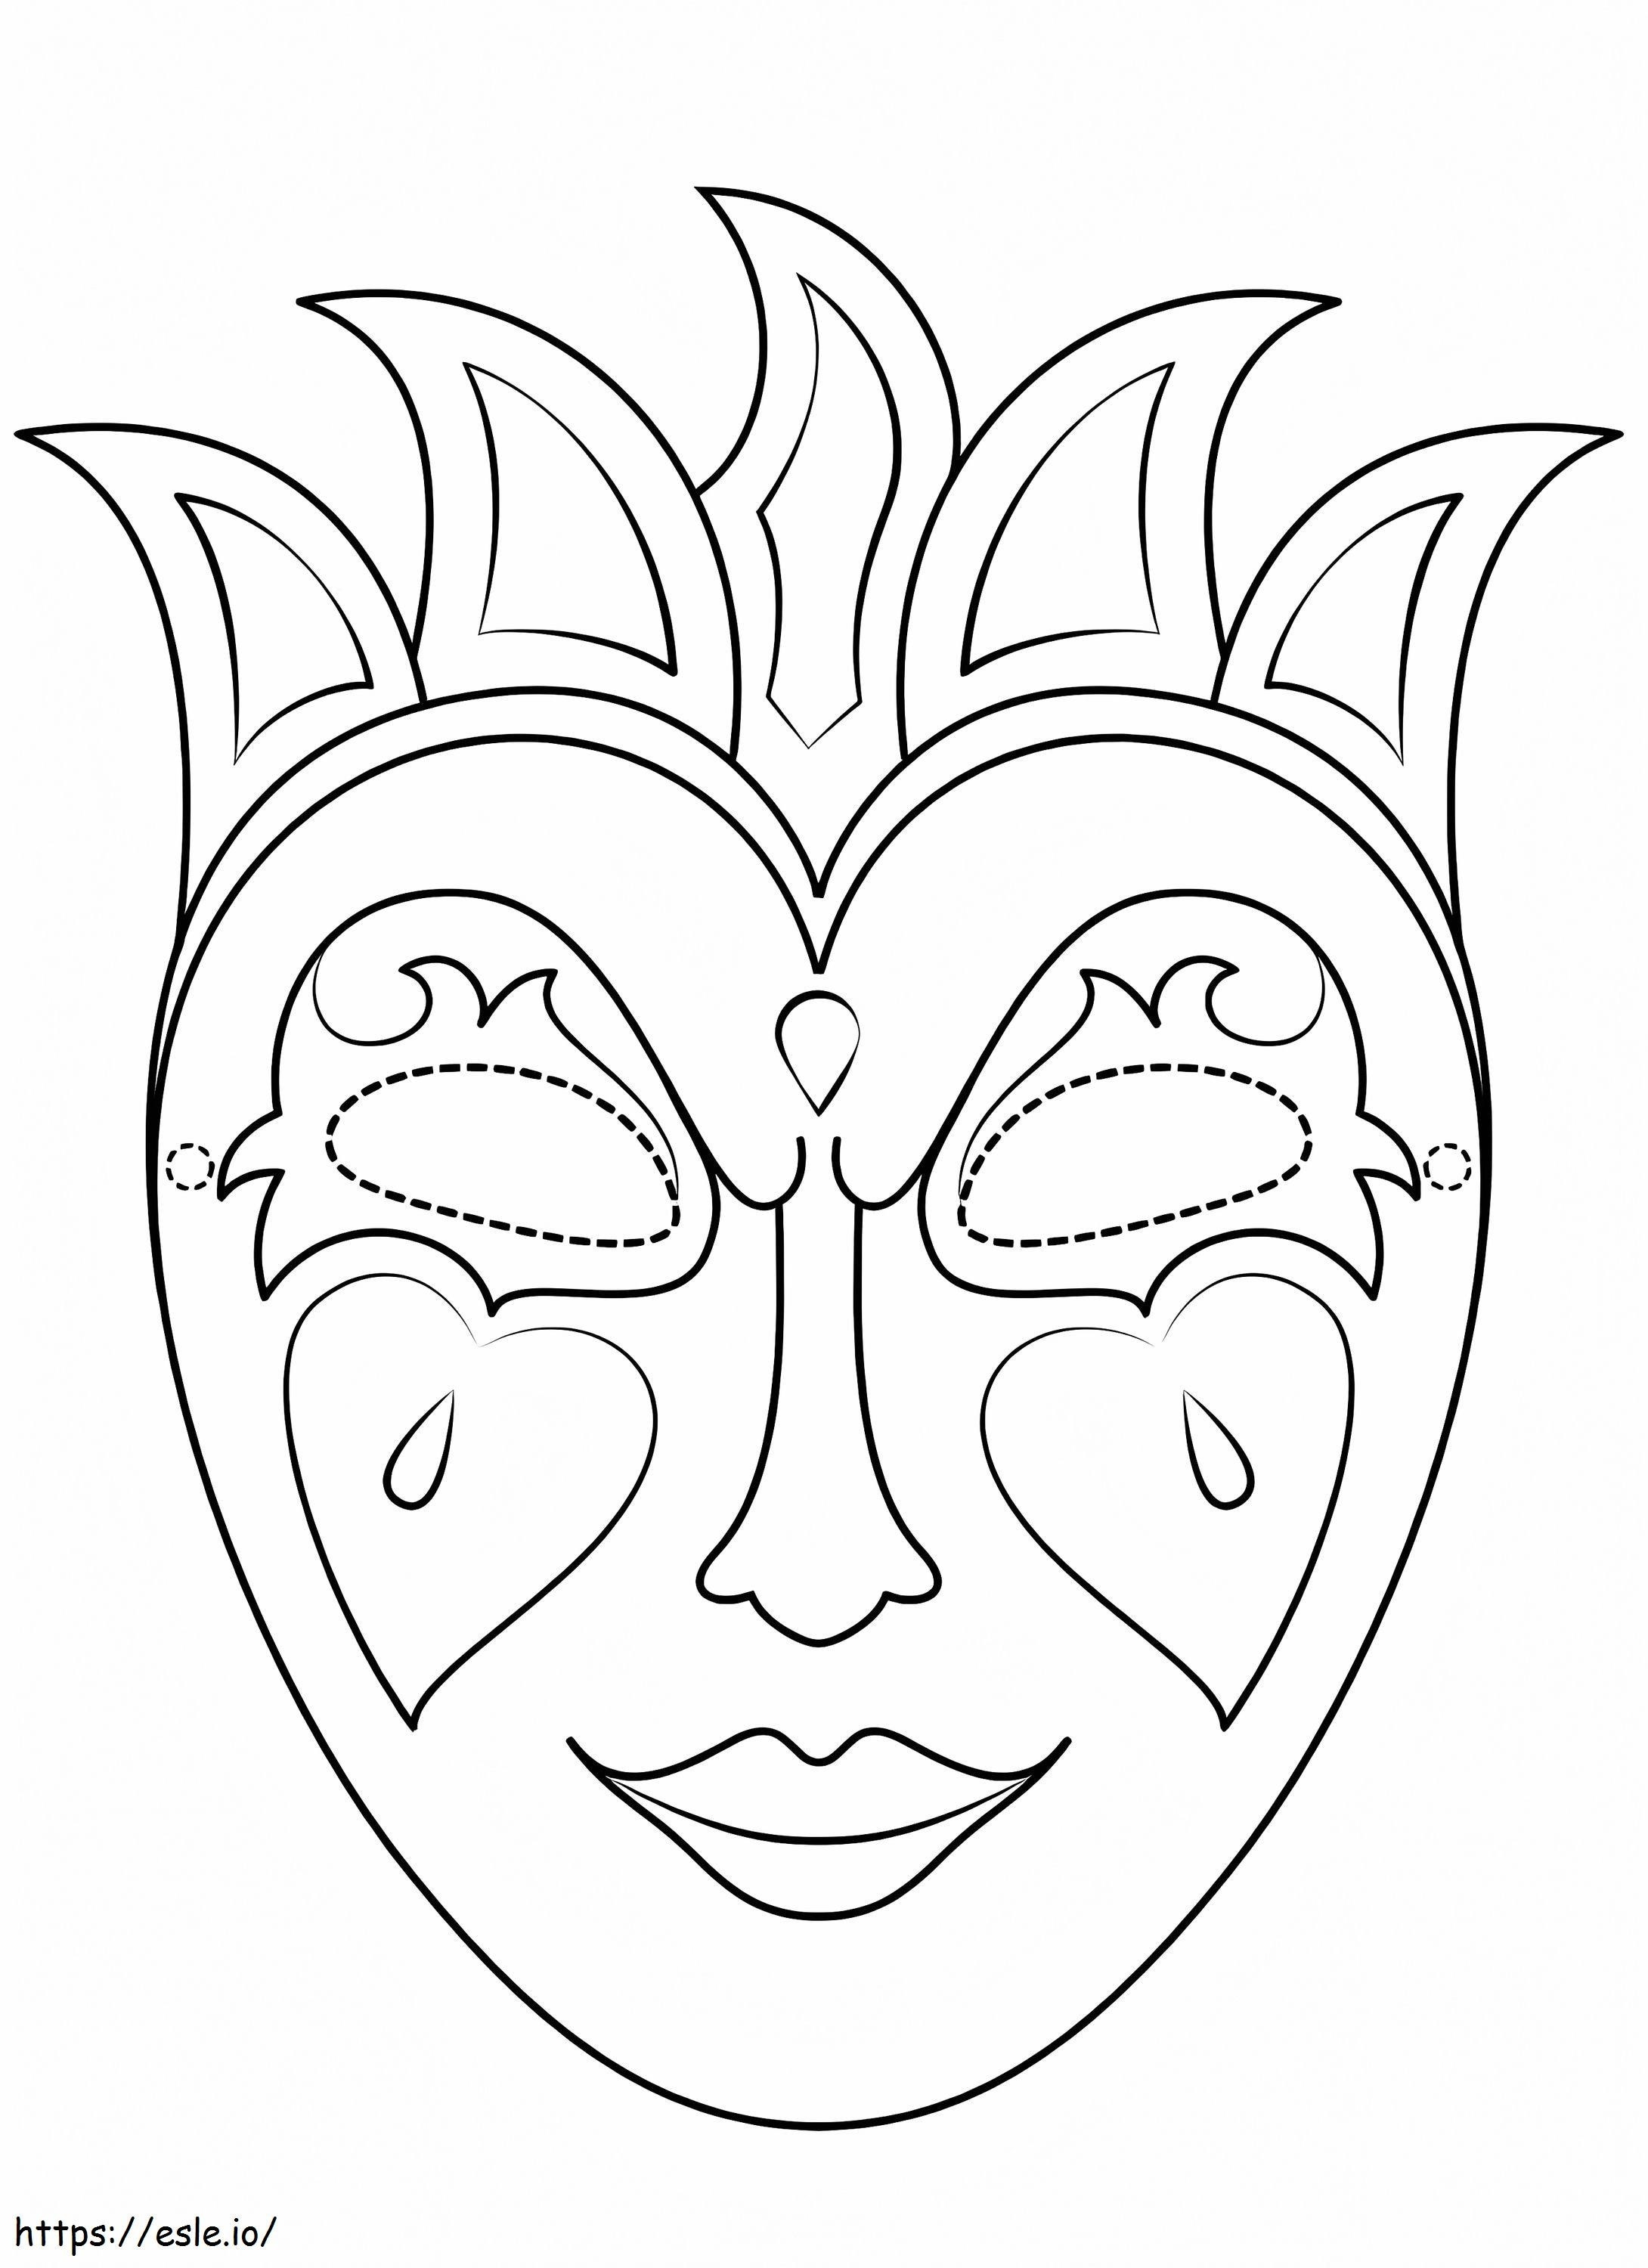 Dibujar máscaras de carnaval